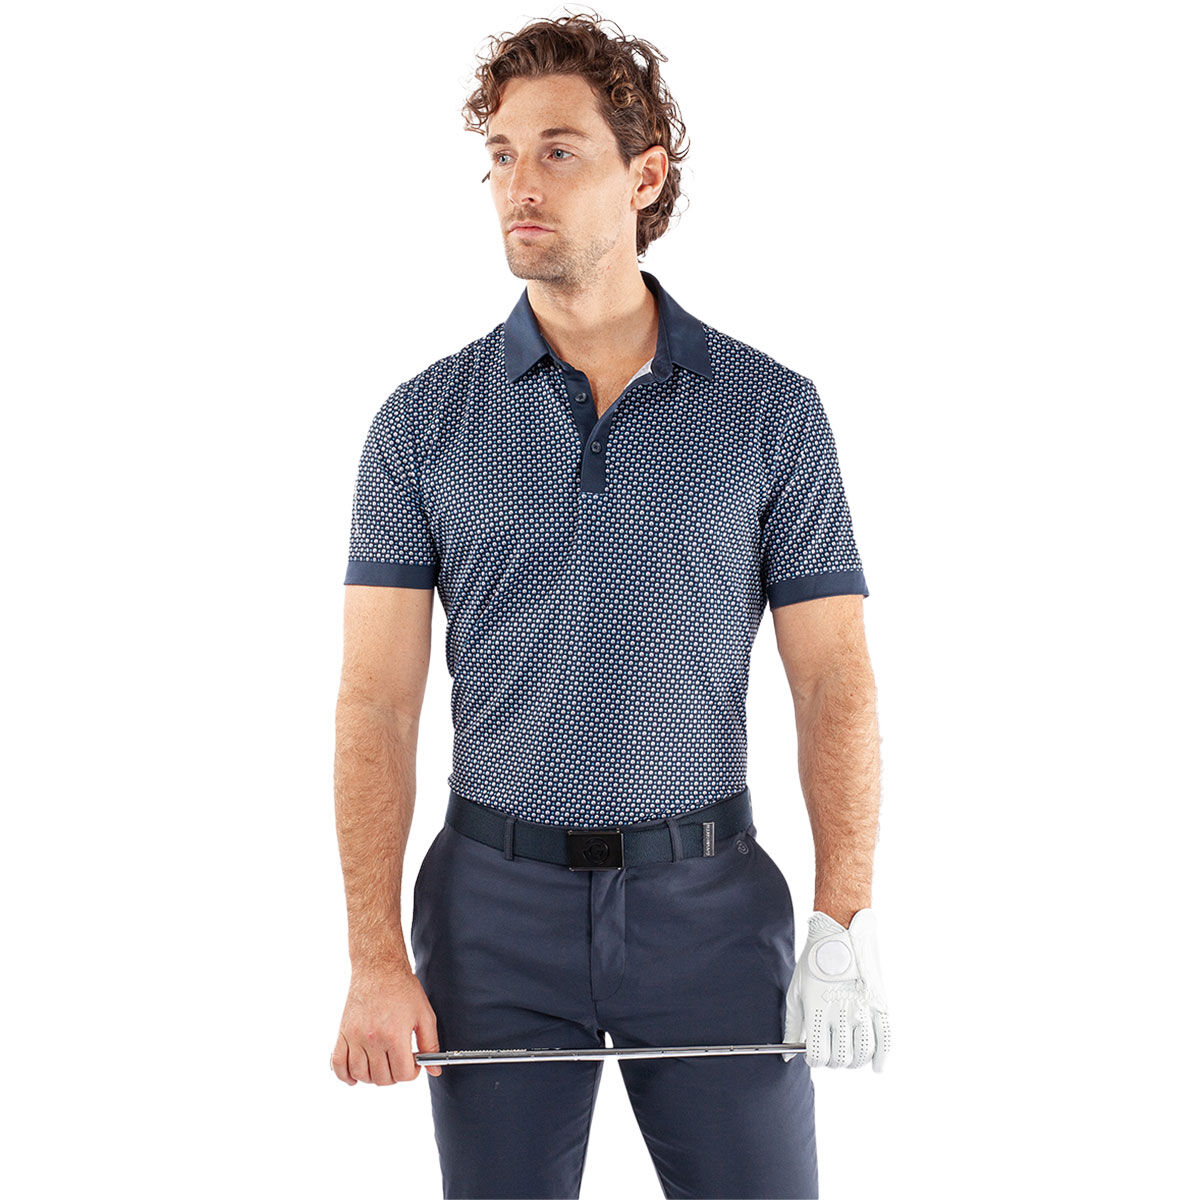 Galvin Green Men’s Mate Golf Polo Shirt, Mens, Cool grey/navy, Large | American Golf